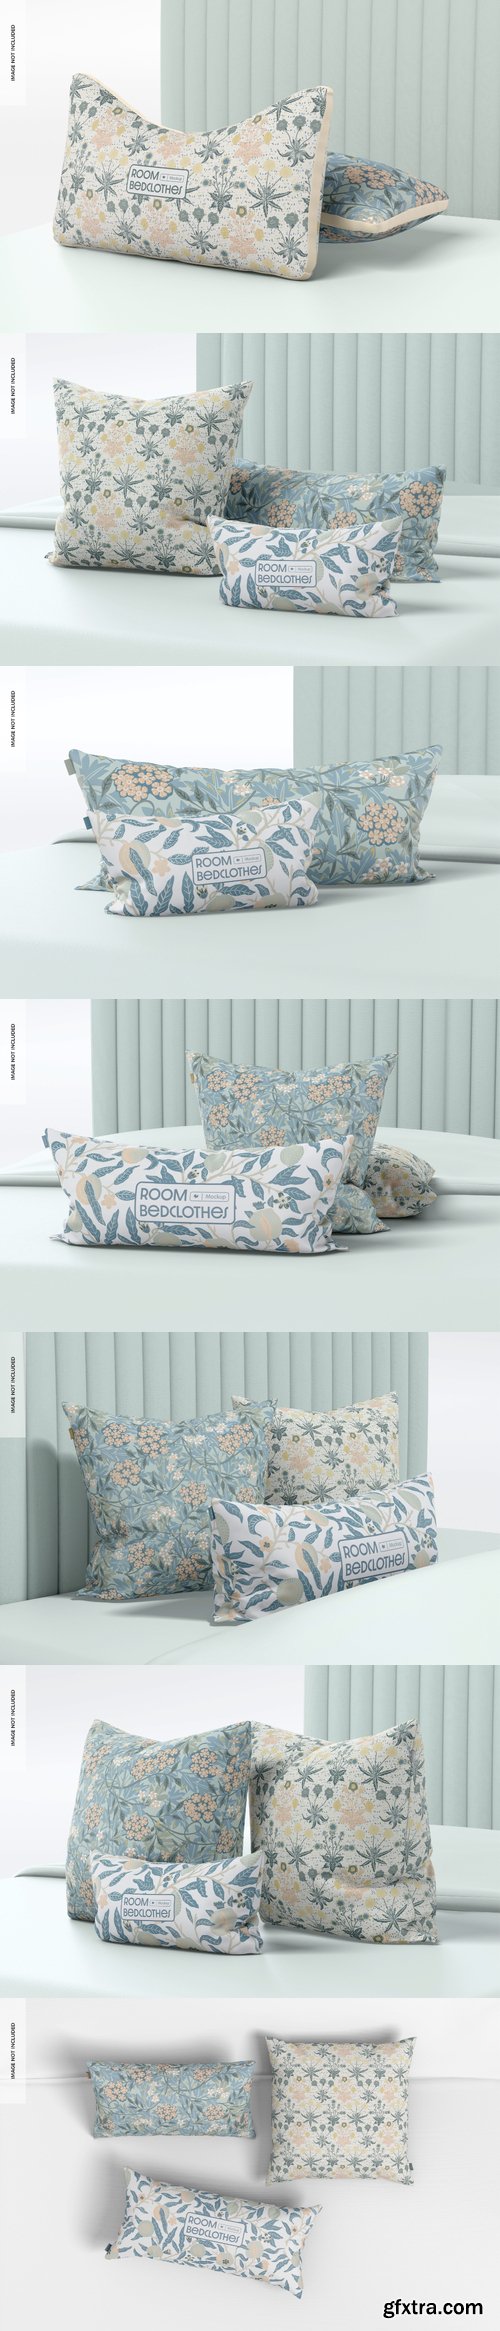 Pillow set mockup